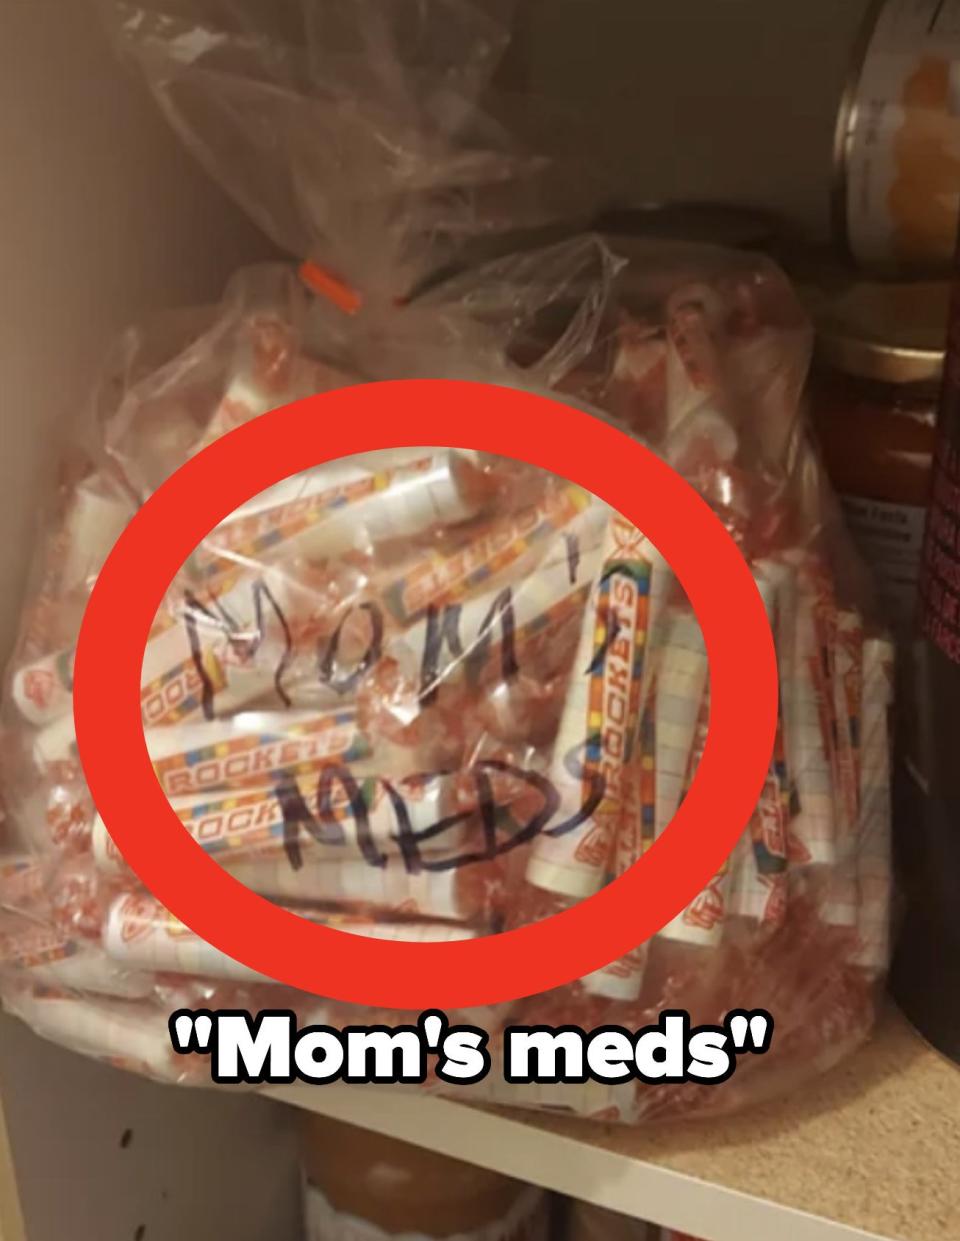 A bag of candy labeled "Mom's meds"